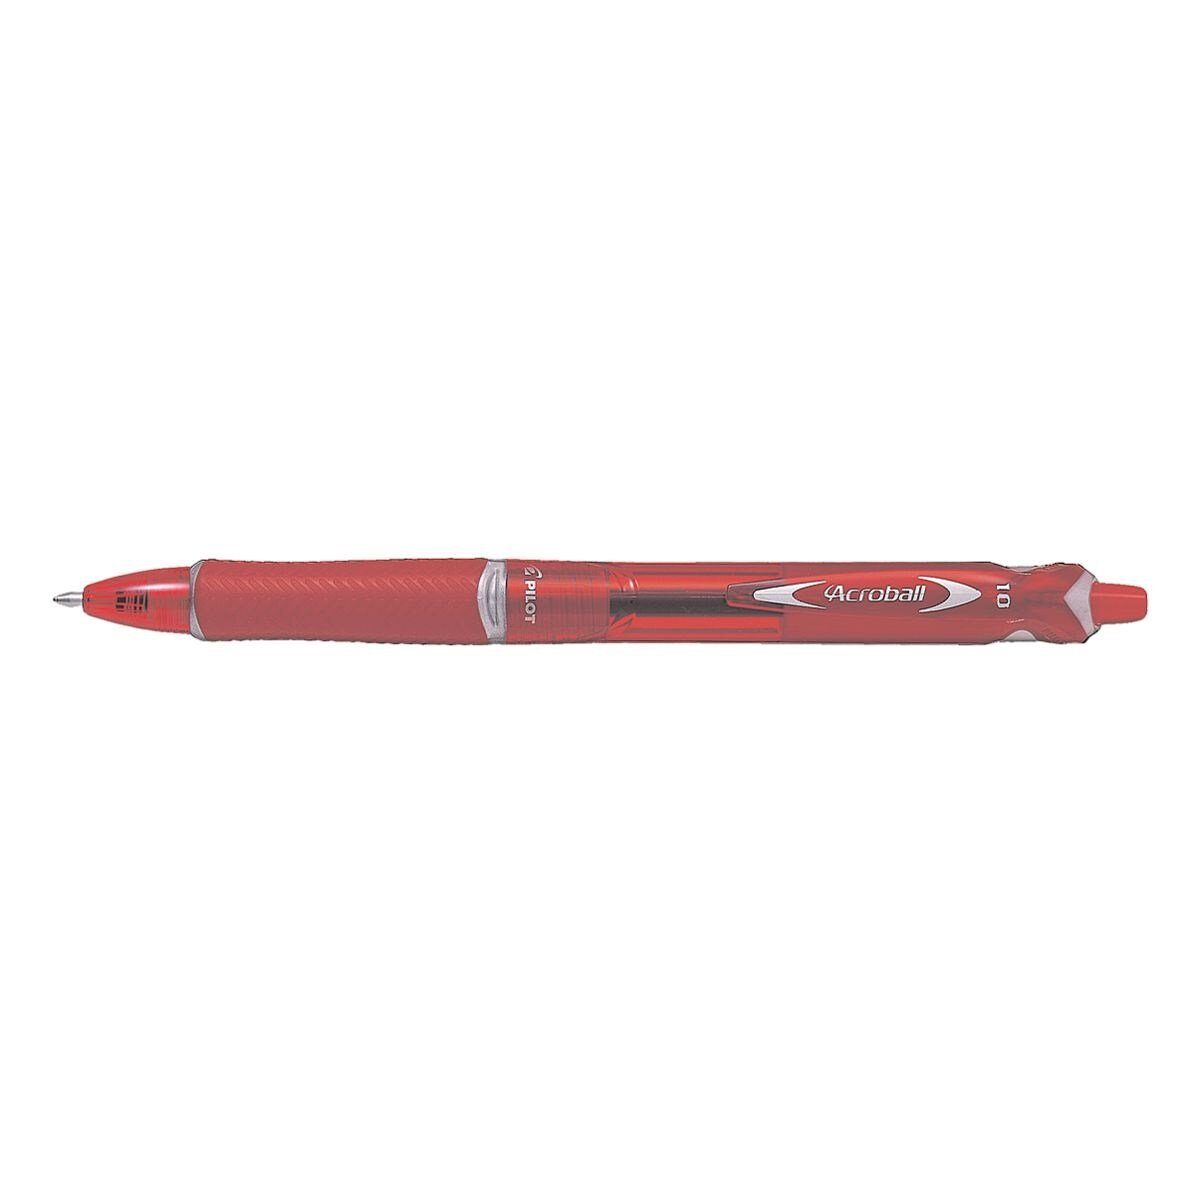 rot mit M, Acroball Kugelschreiber PILOT transparentem Gehäuse